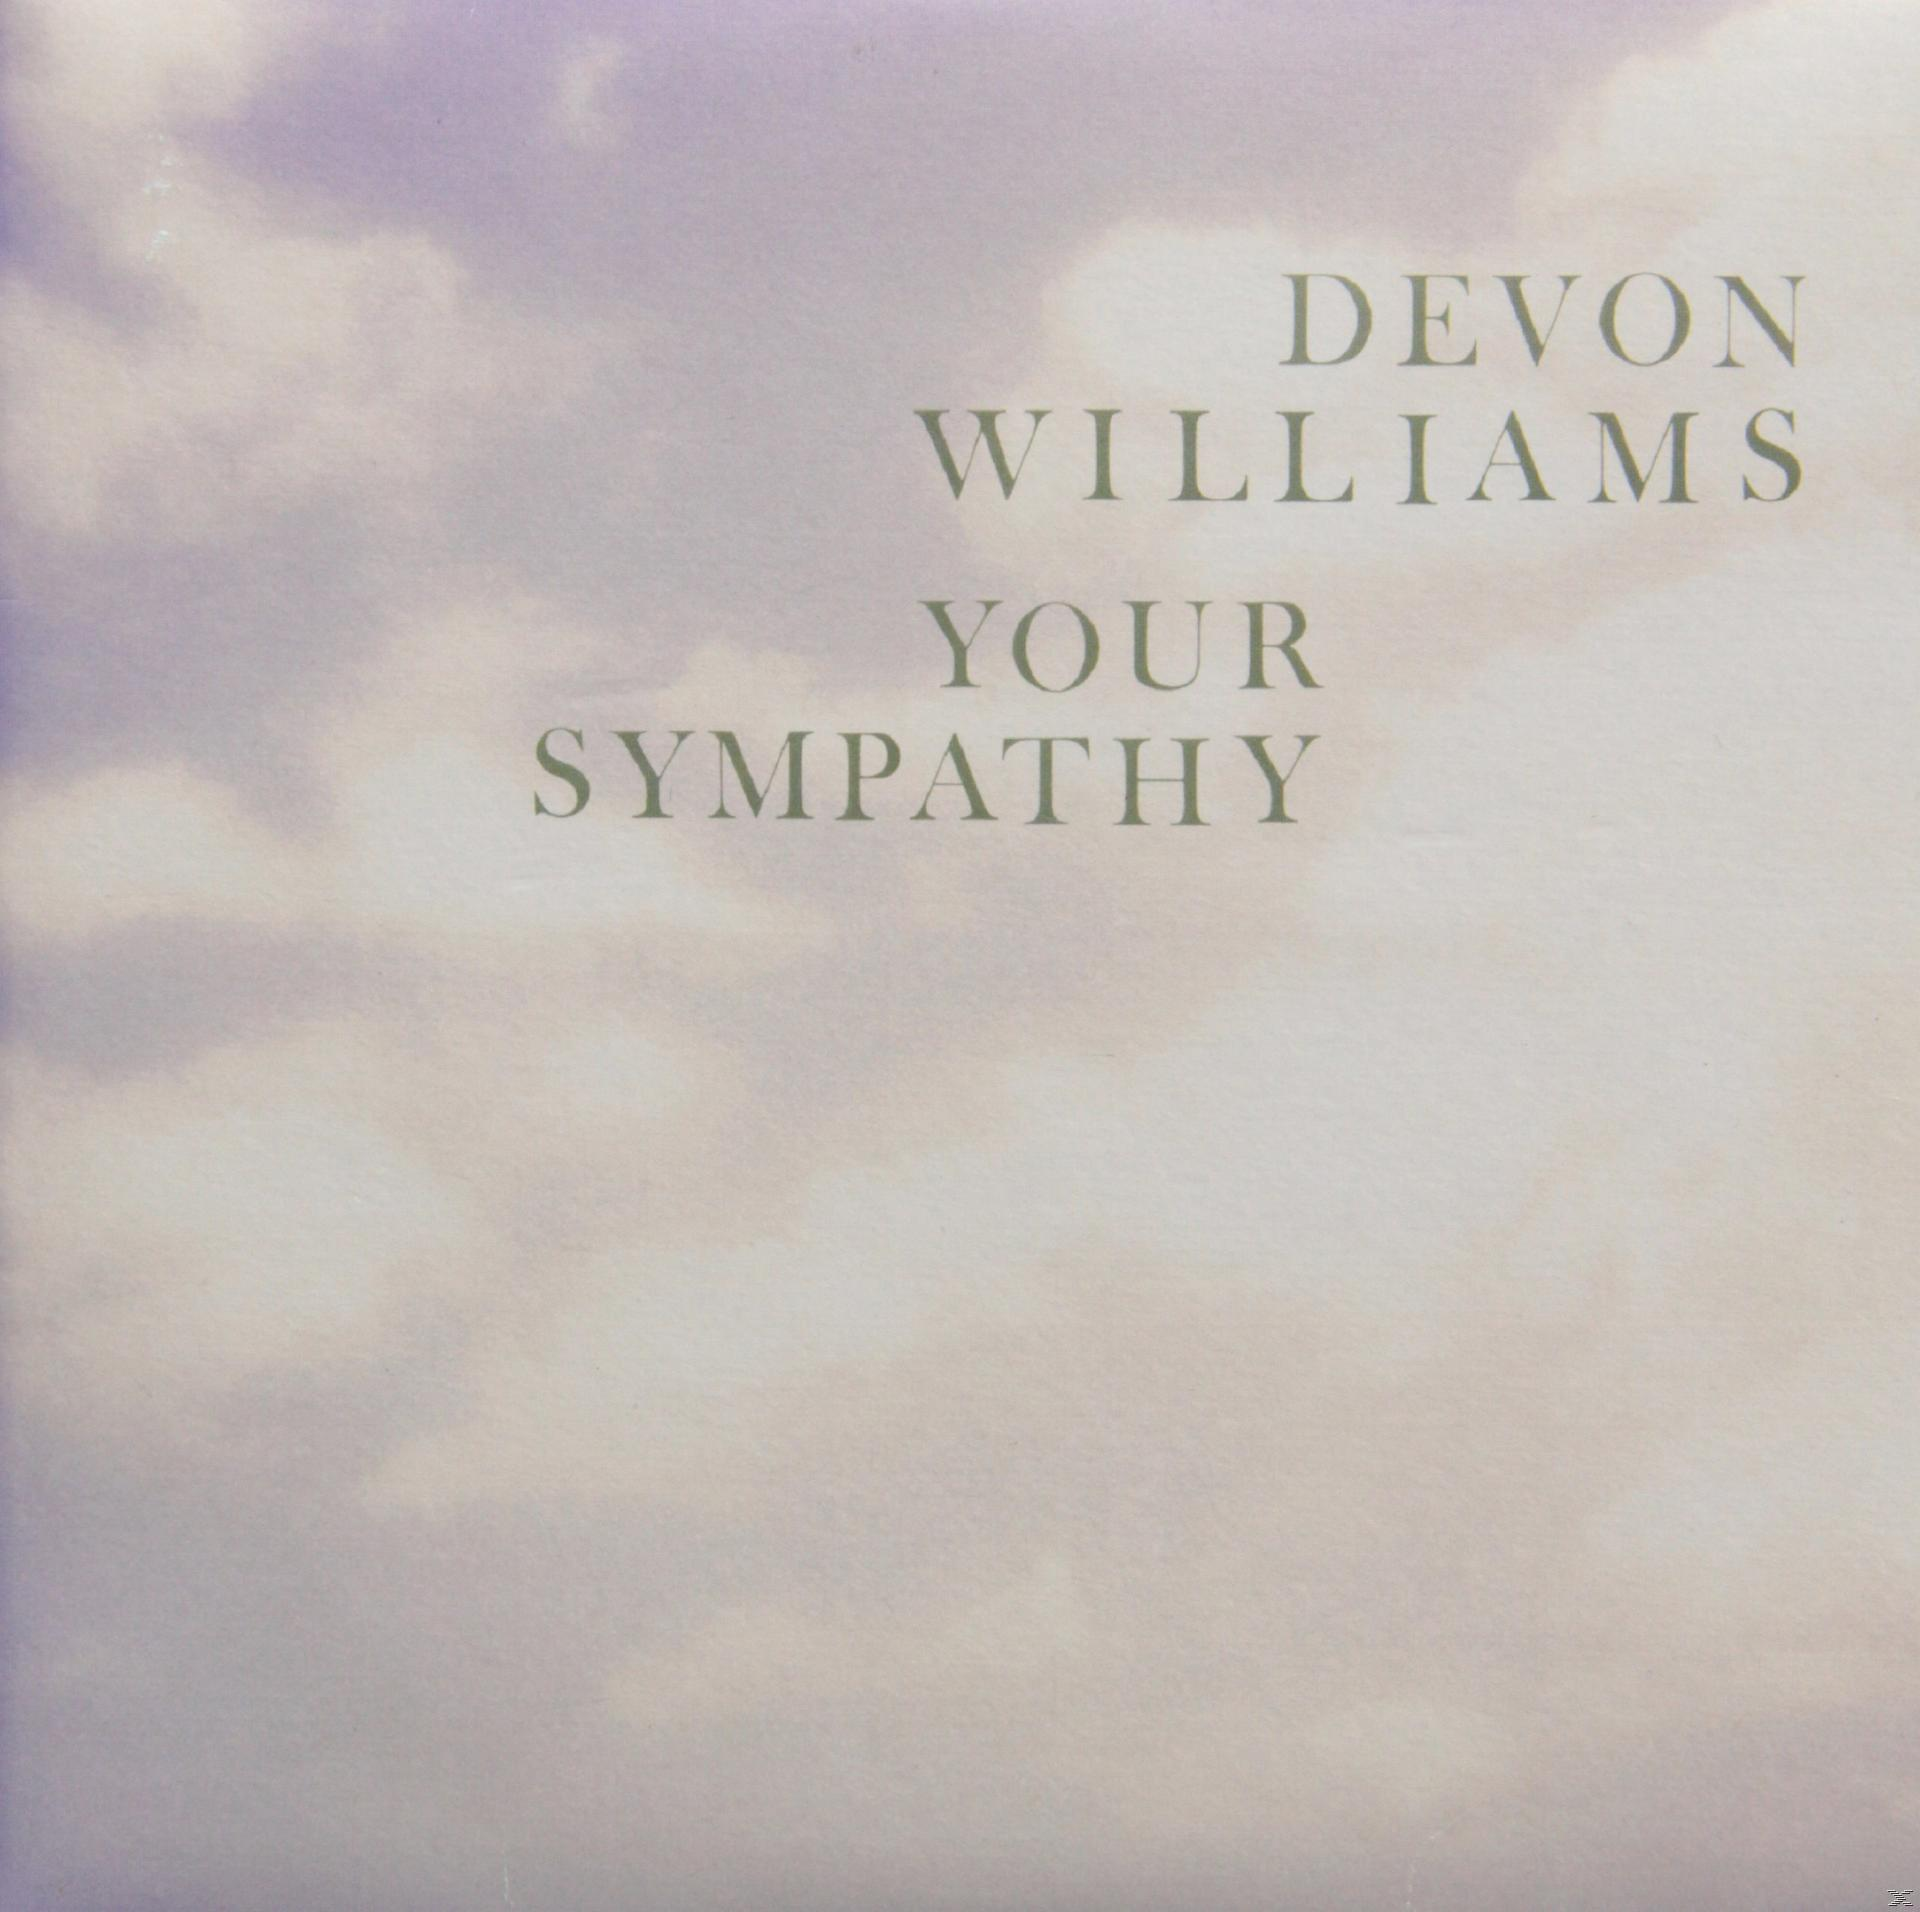 Sympathy - Devon (Vinyl) Your - Williams